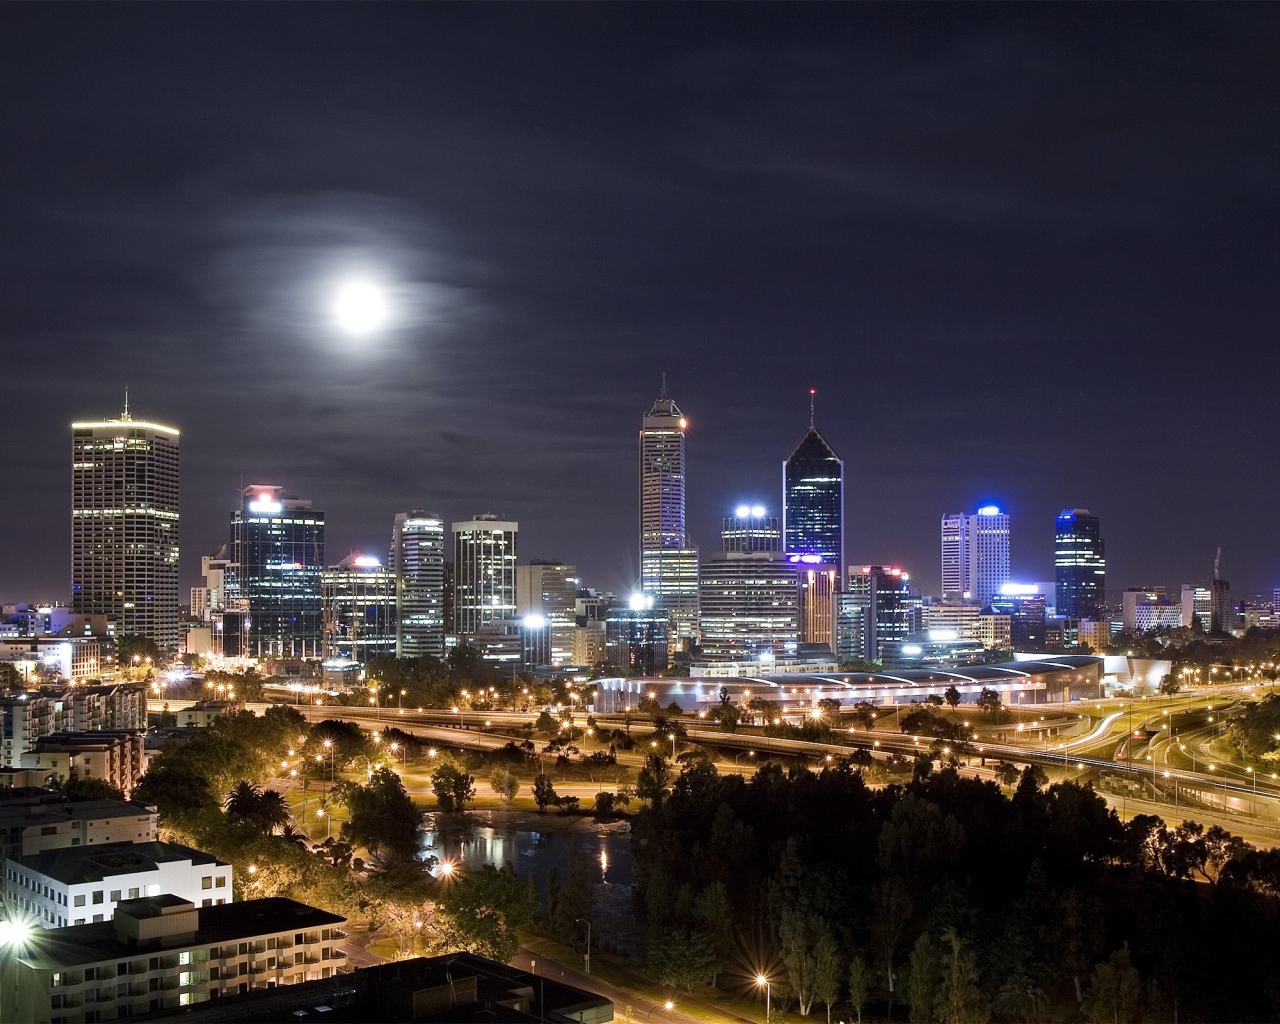 A city in Australia moonlit night